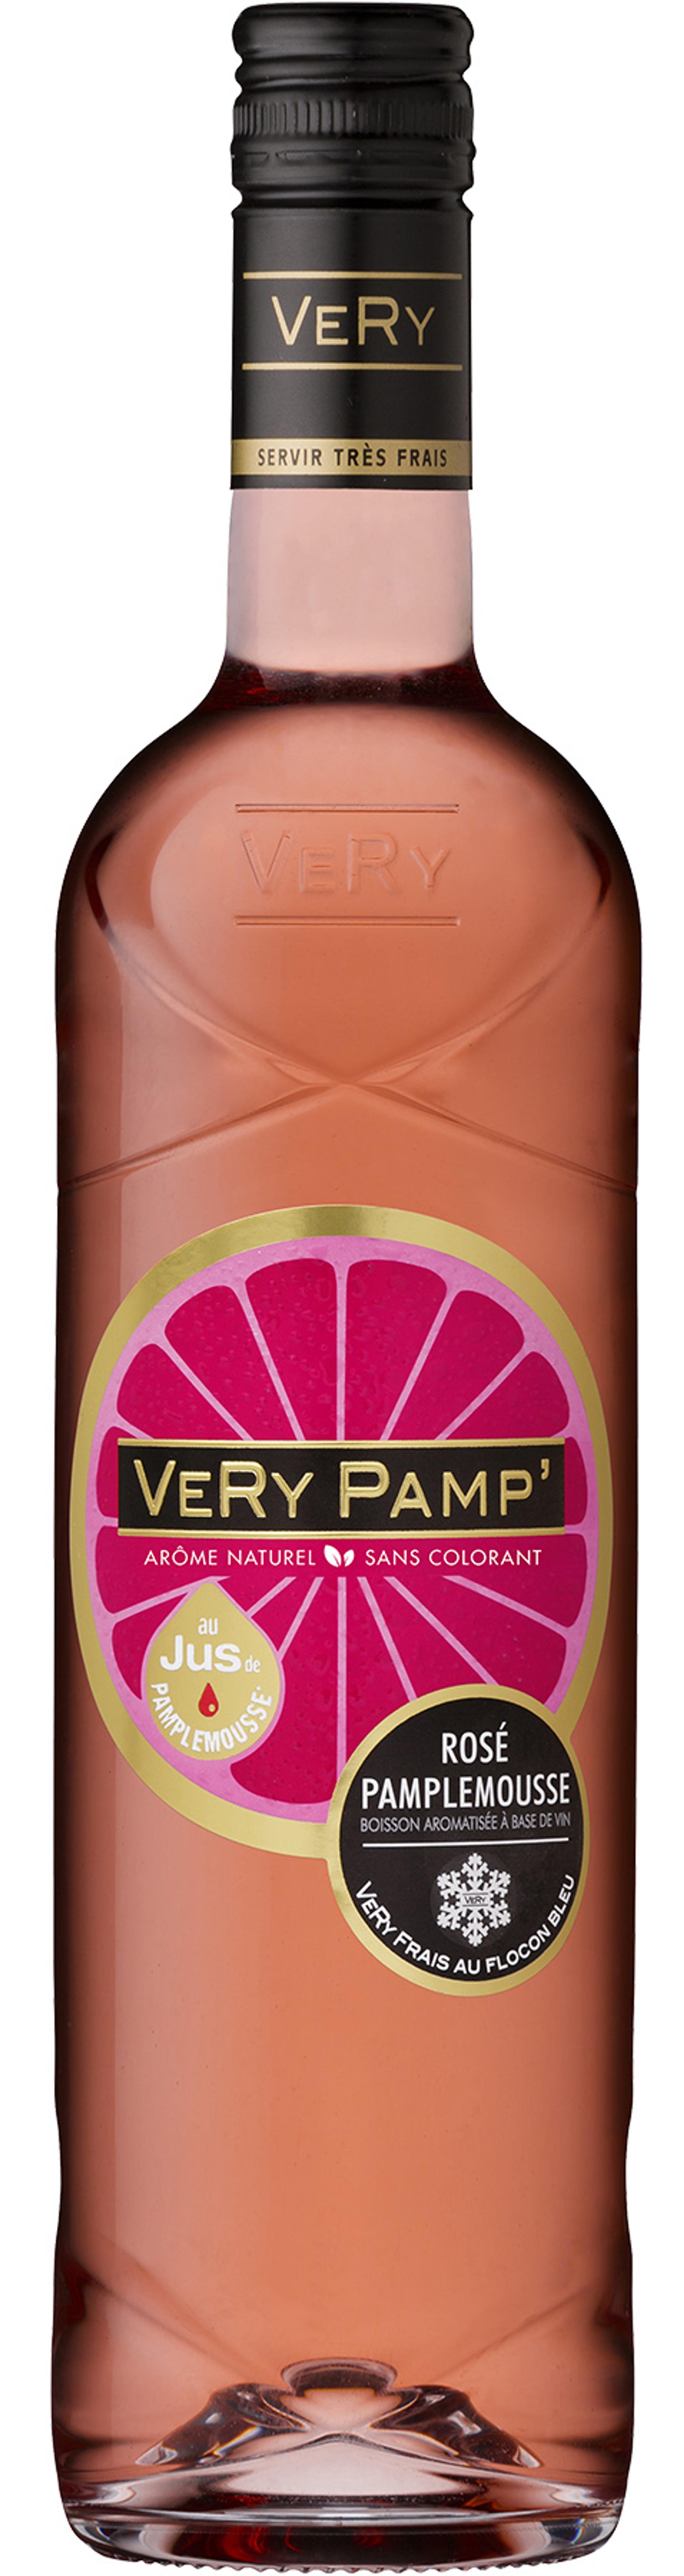 VeRy Pamp' rosé